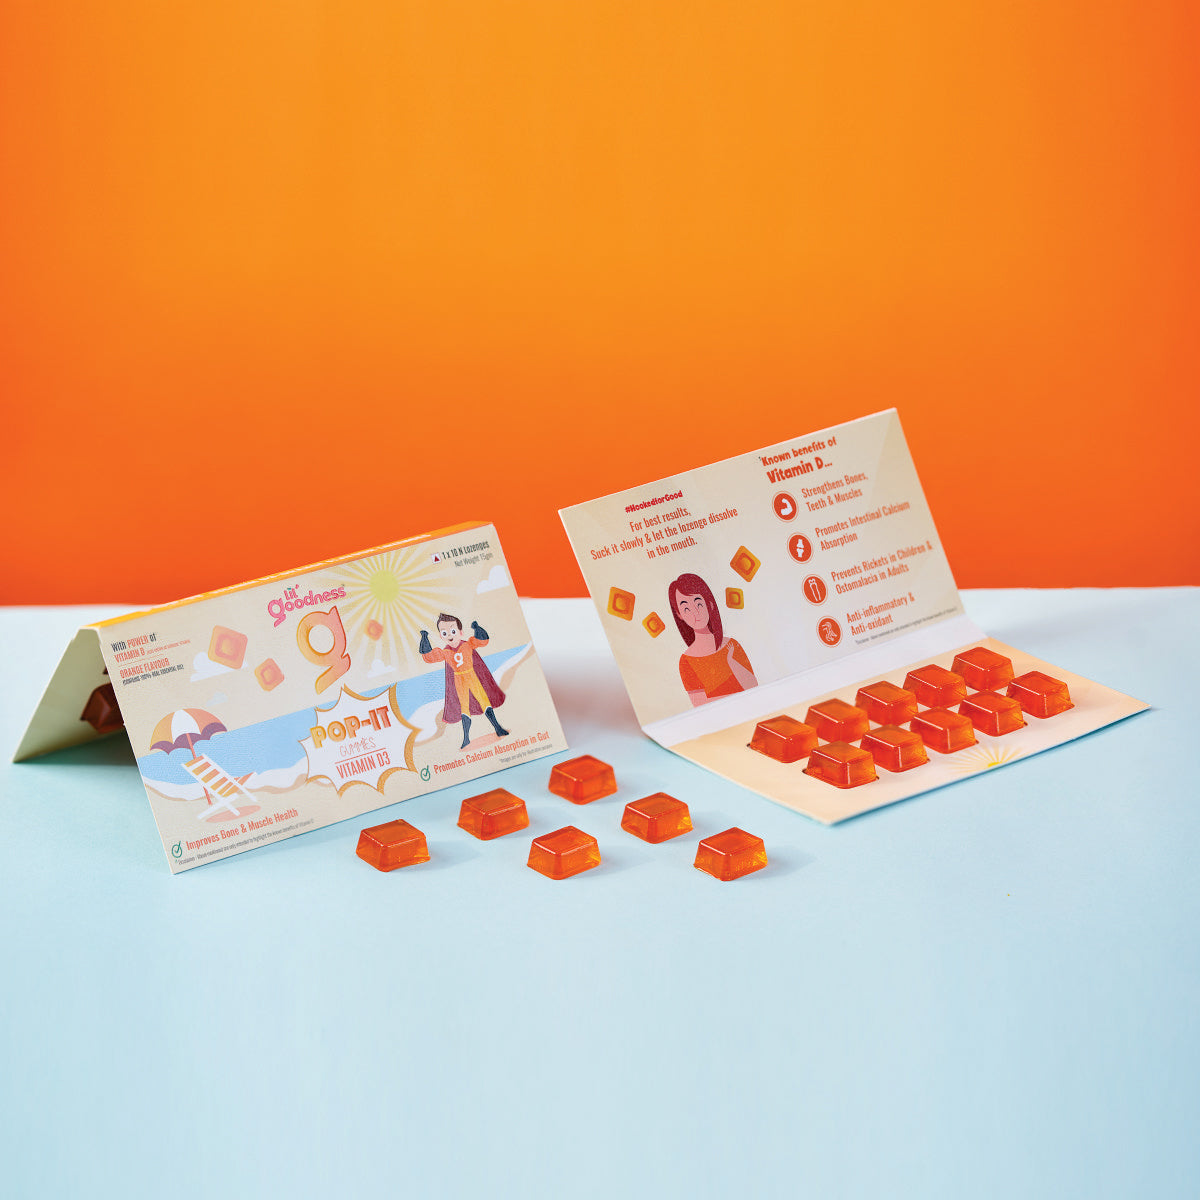 Lil'Goodness POP-IT Gummies Vitamin D - Orange Flavour Lozenges 15g (Pack of 3)